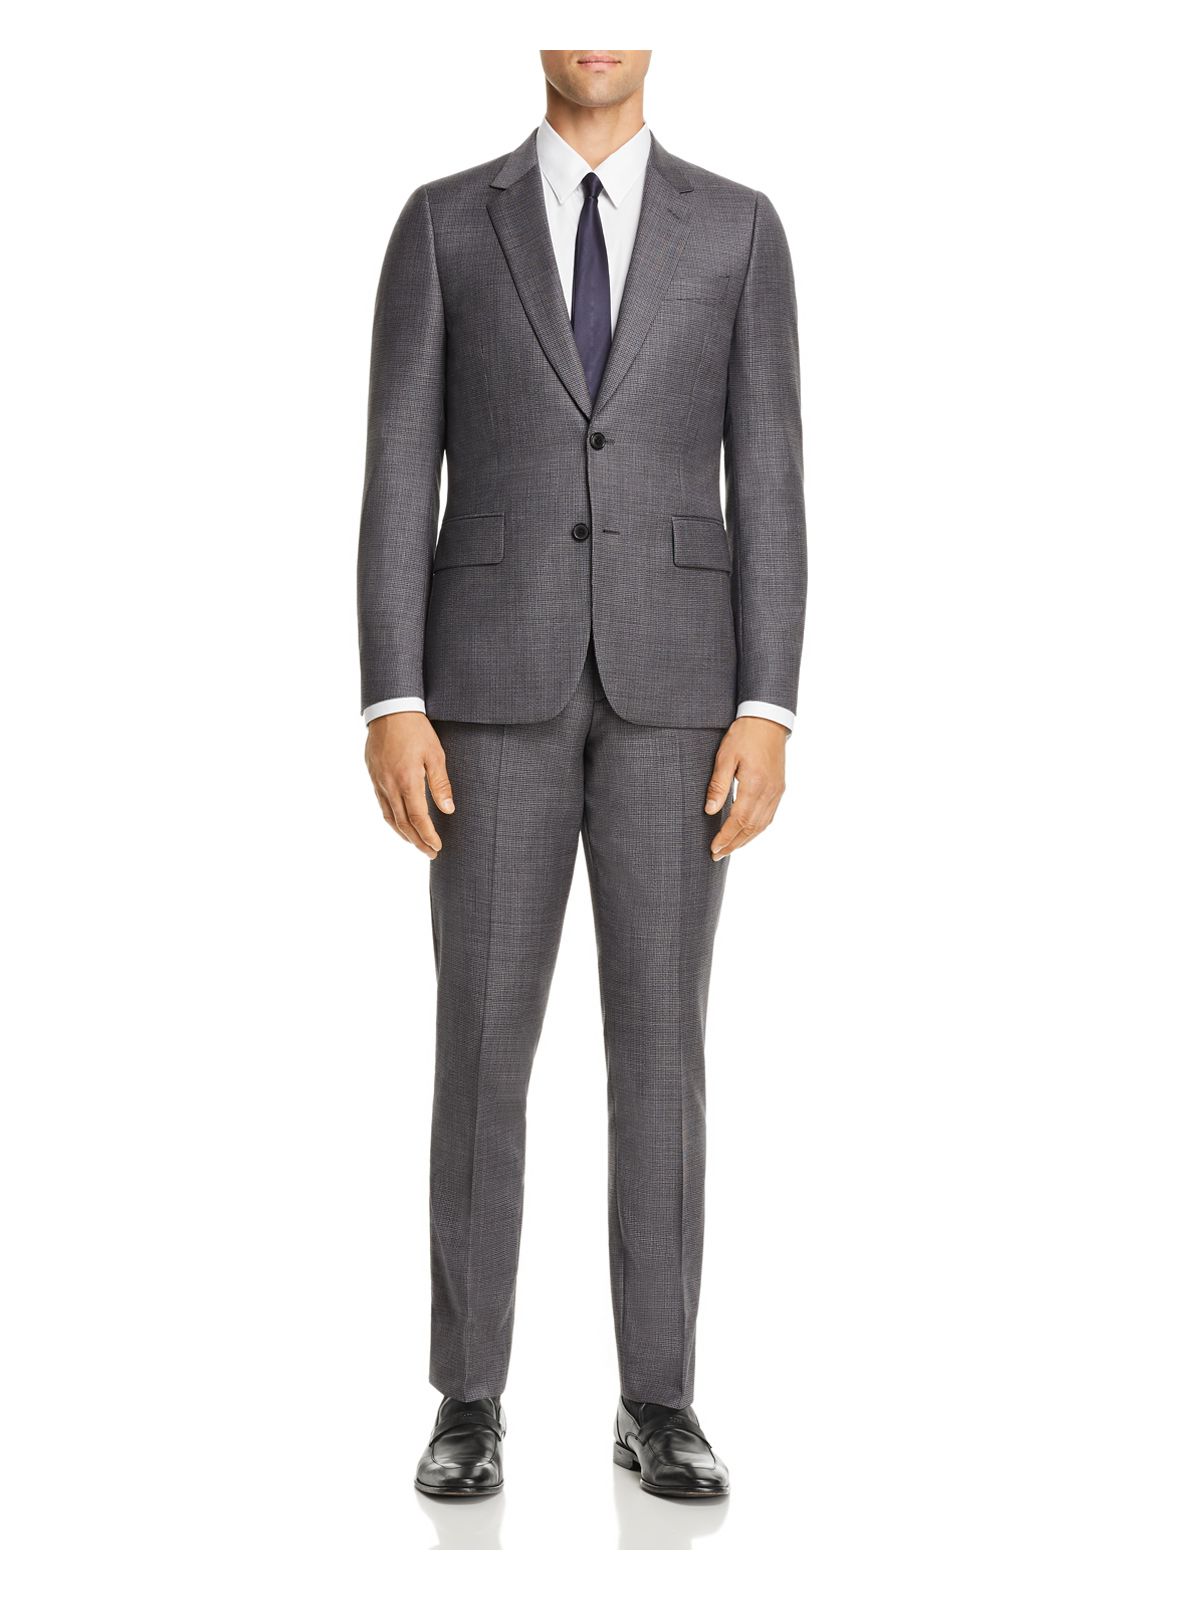 F S R Mens Soho Gray Extra Slim Fit Suit 40R 36 WAIST